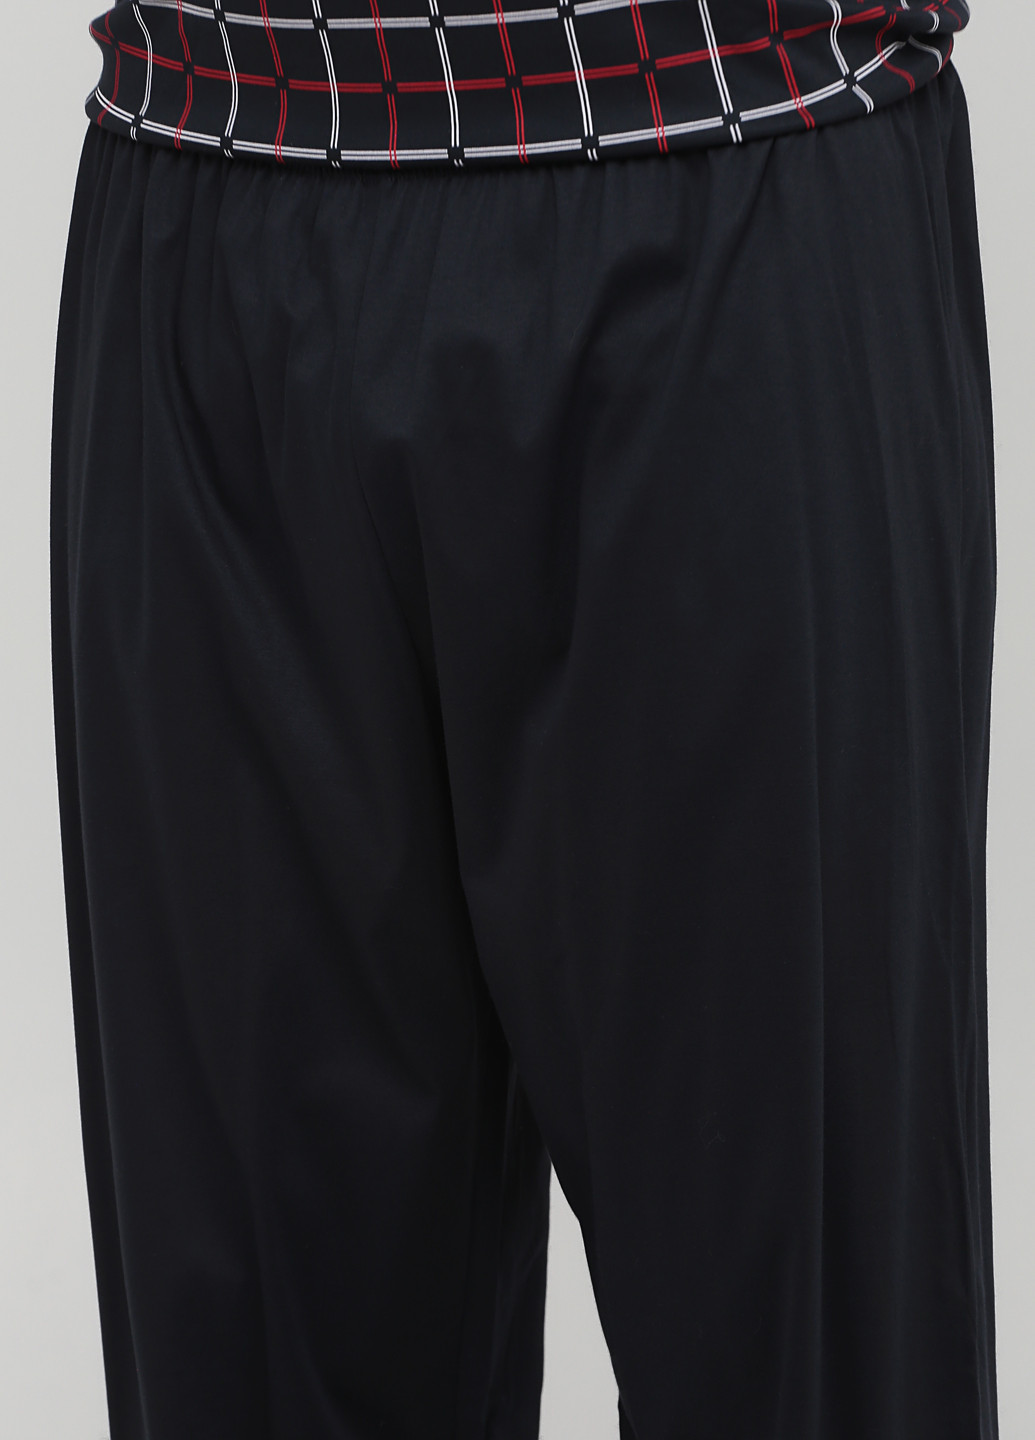 Пижама (лонгслив, брюки) Calida лонгслив + брюки клетка графитовая домашняя трикотаж, хлопок